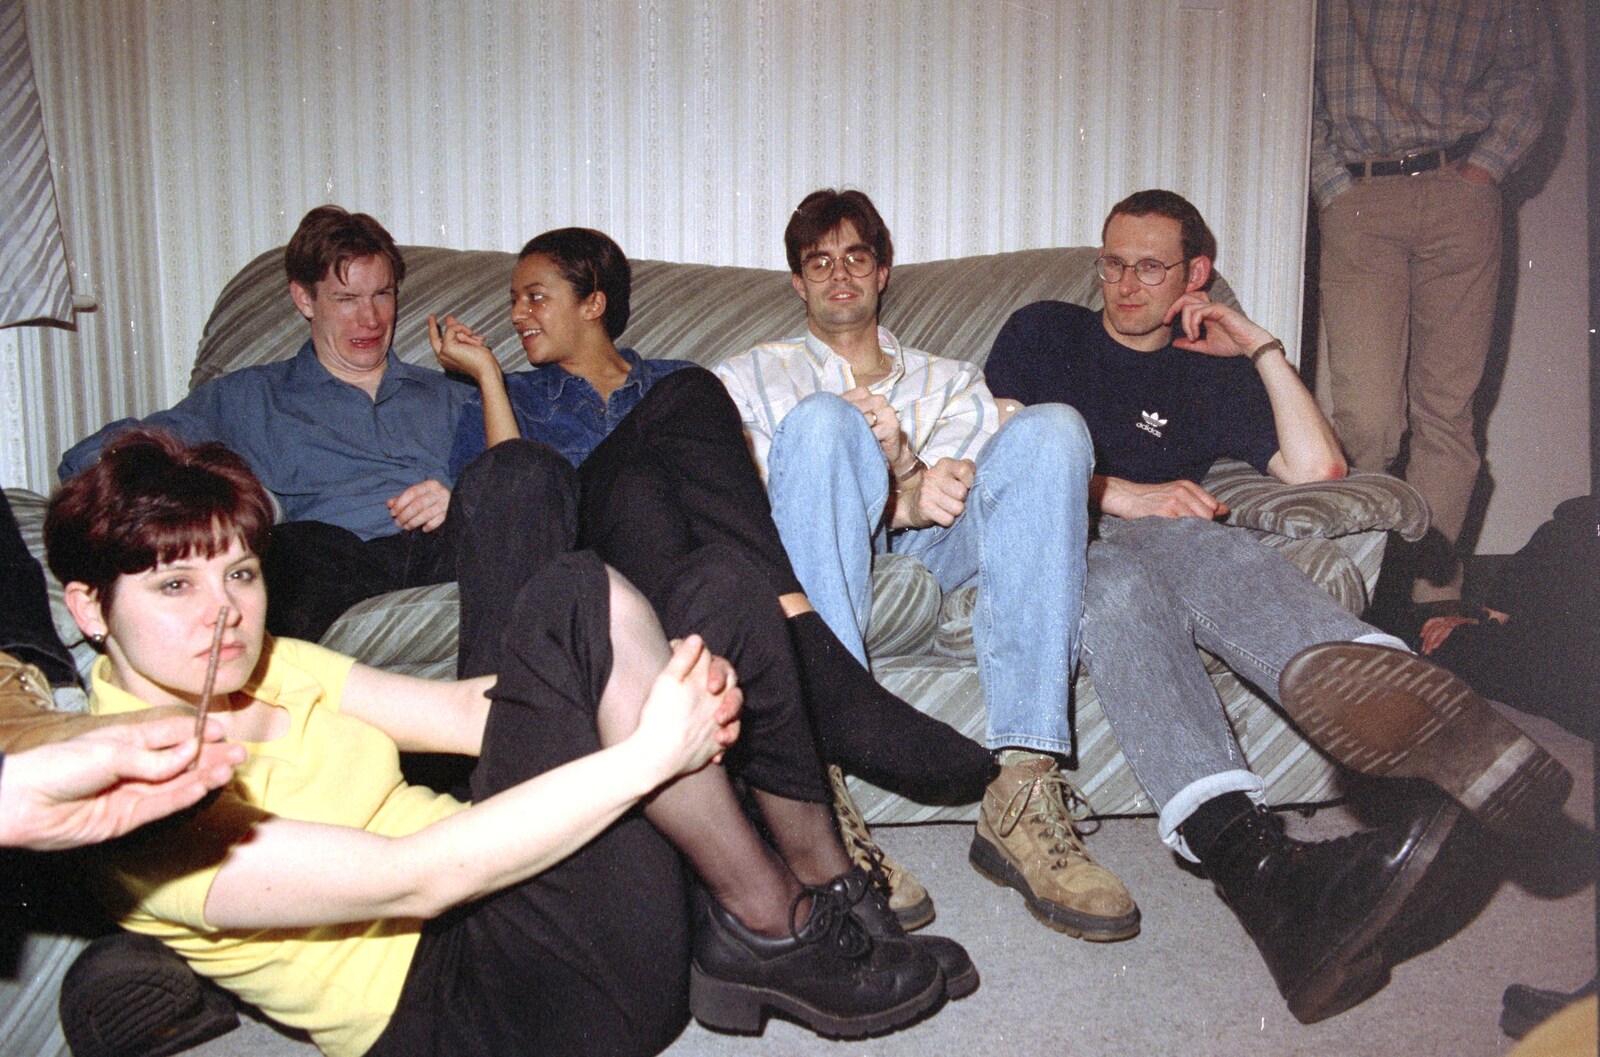 Lisa, Paul, Natalie, Dan 'Parrot' and Dougie from Dougie's Birthday and Adrian Leaves CISU, Ipswich, Suffolk - 29th June 1997